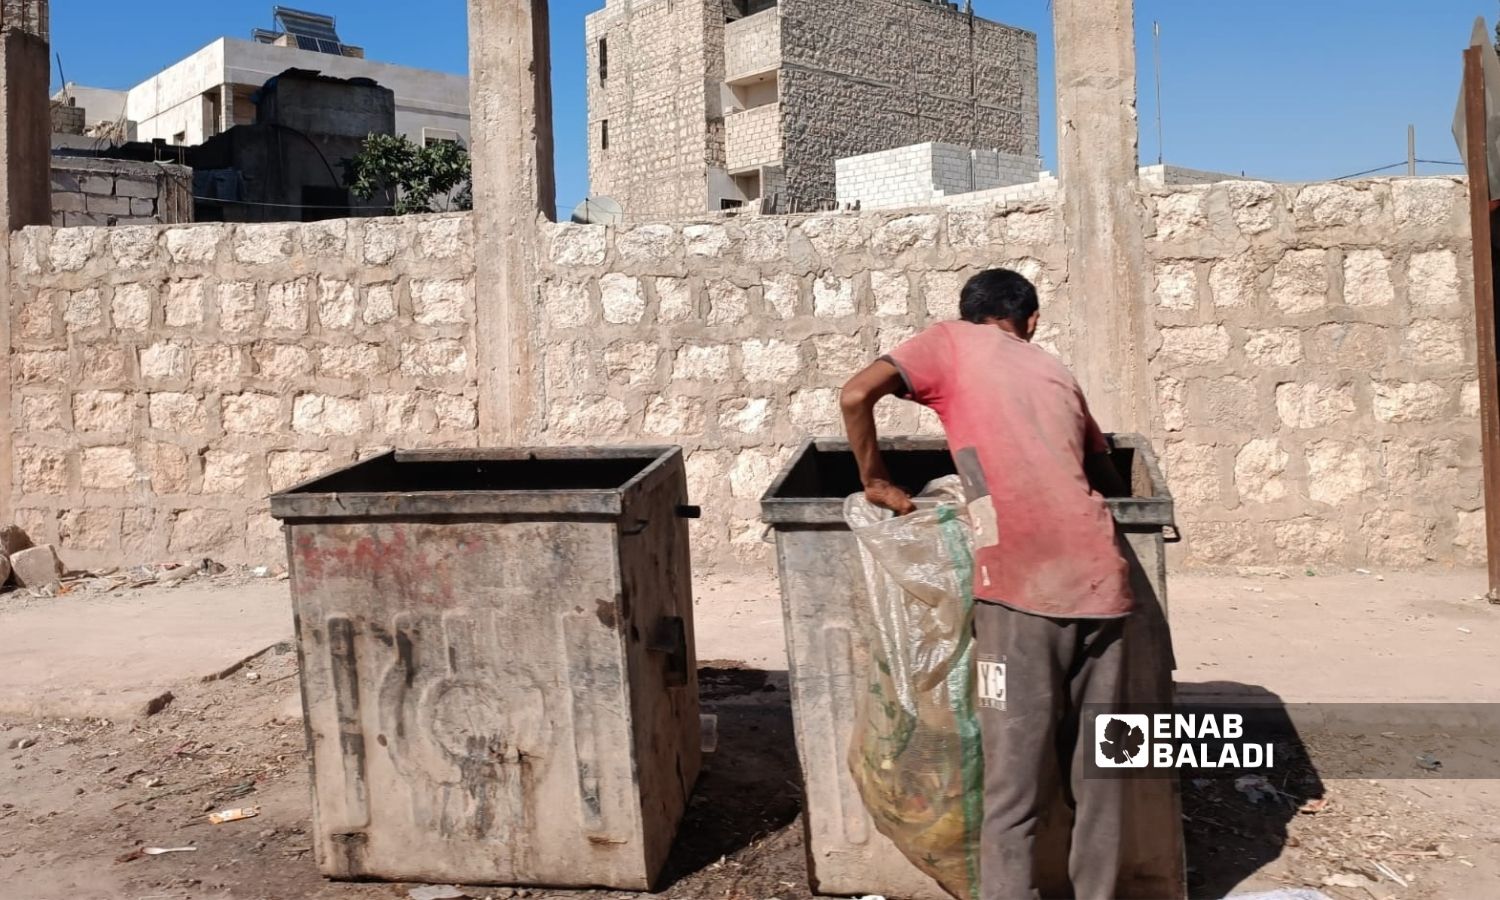 A young man scavenges trash in the city of al-Dana, north of Idlib, August 2022 (Enab Baladi / Huda al-Kulaib)